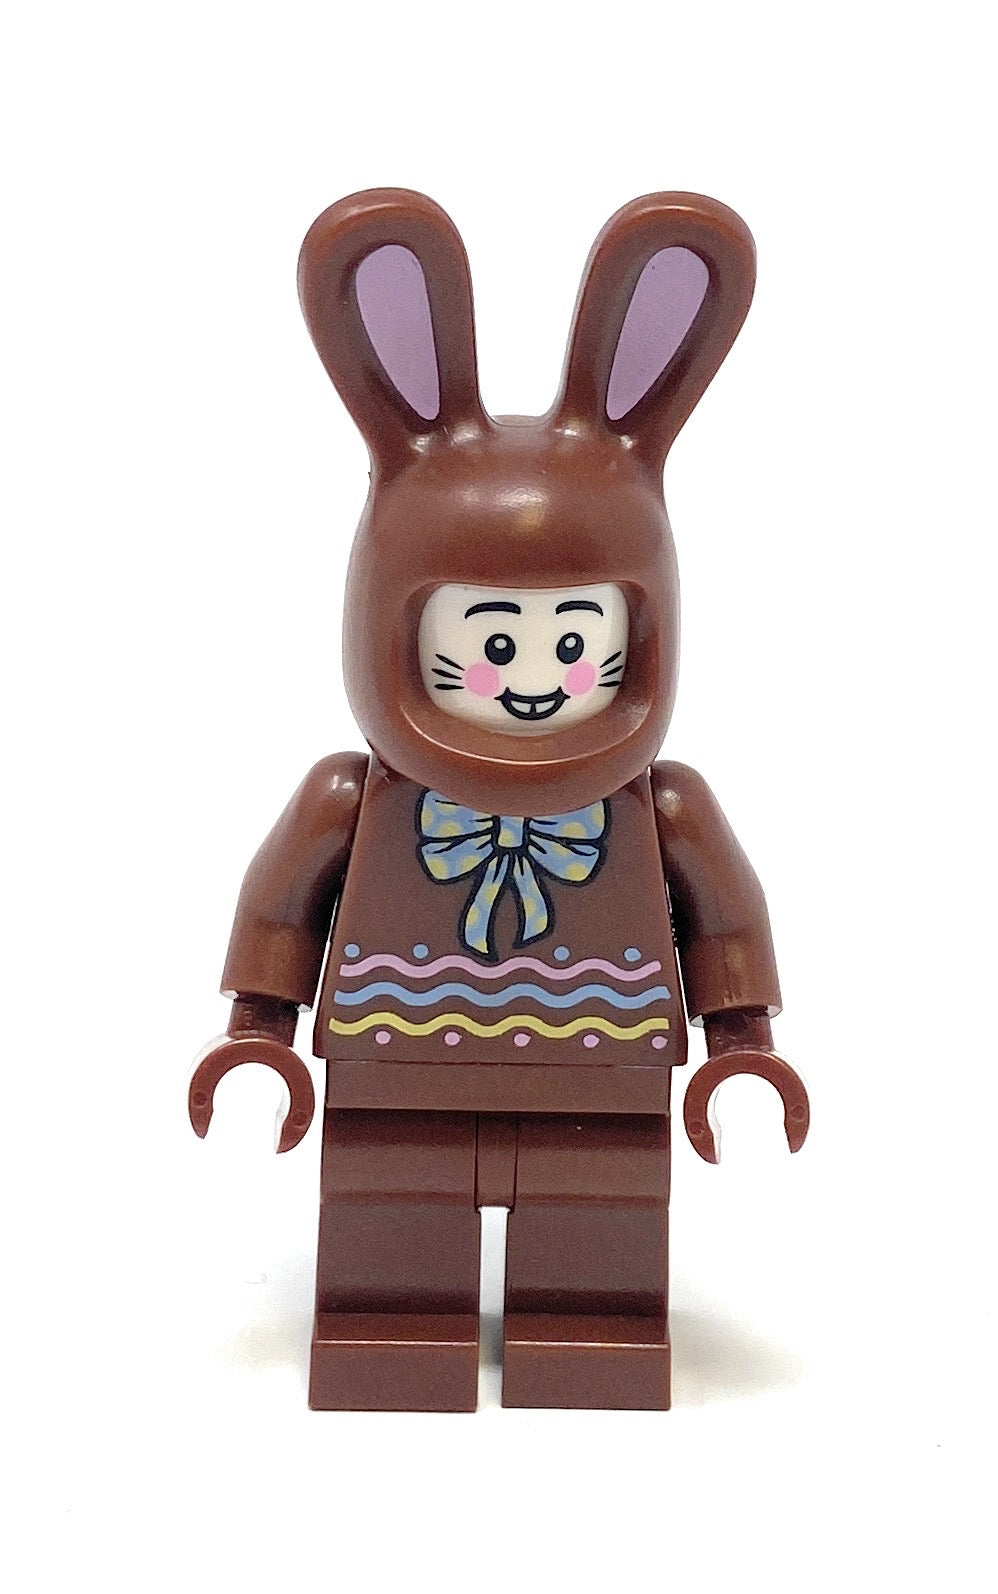 Chocolate Easter Bunny - LEGO minifigure